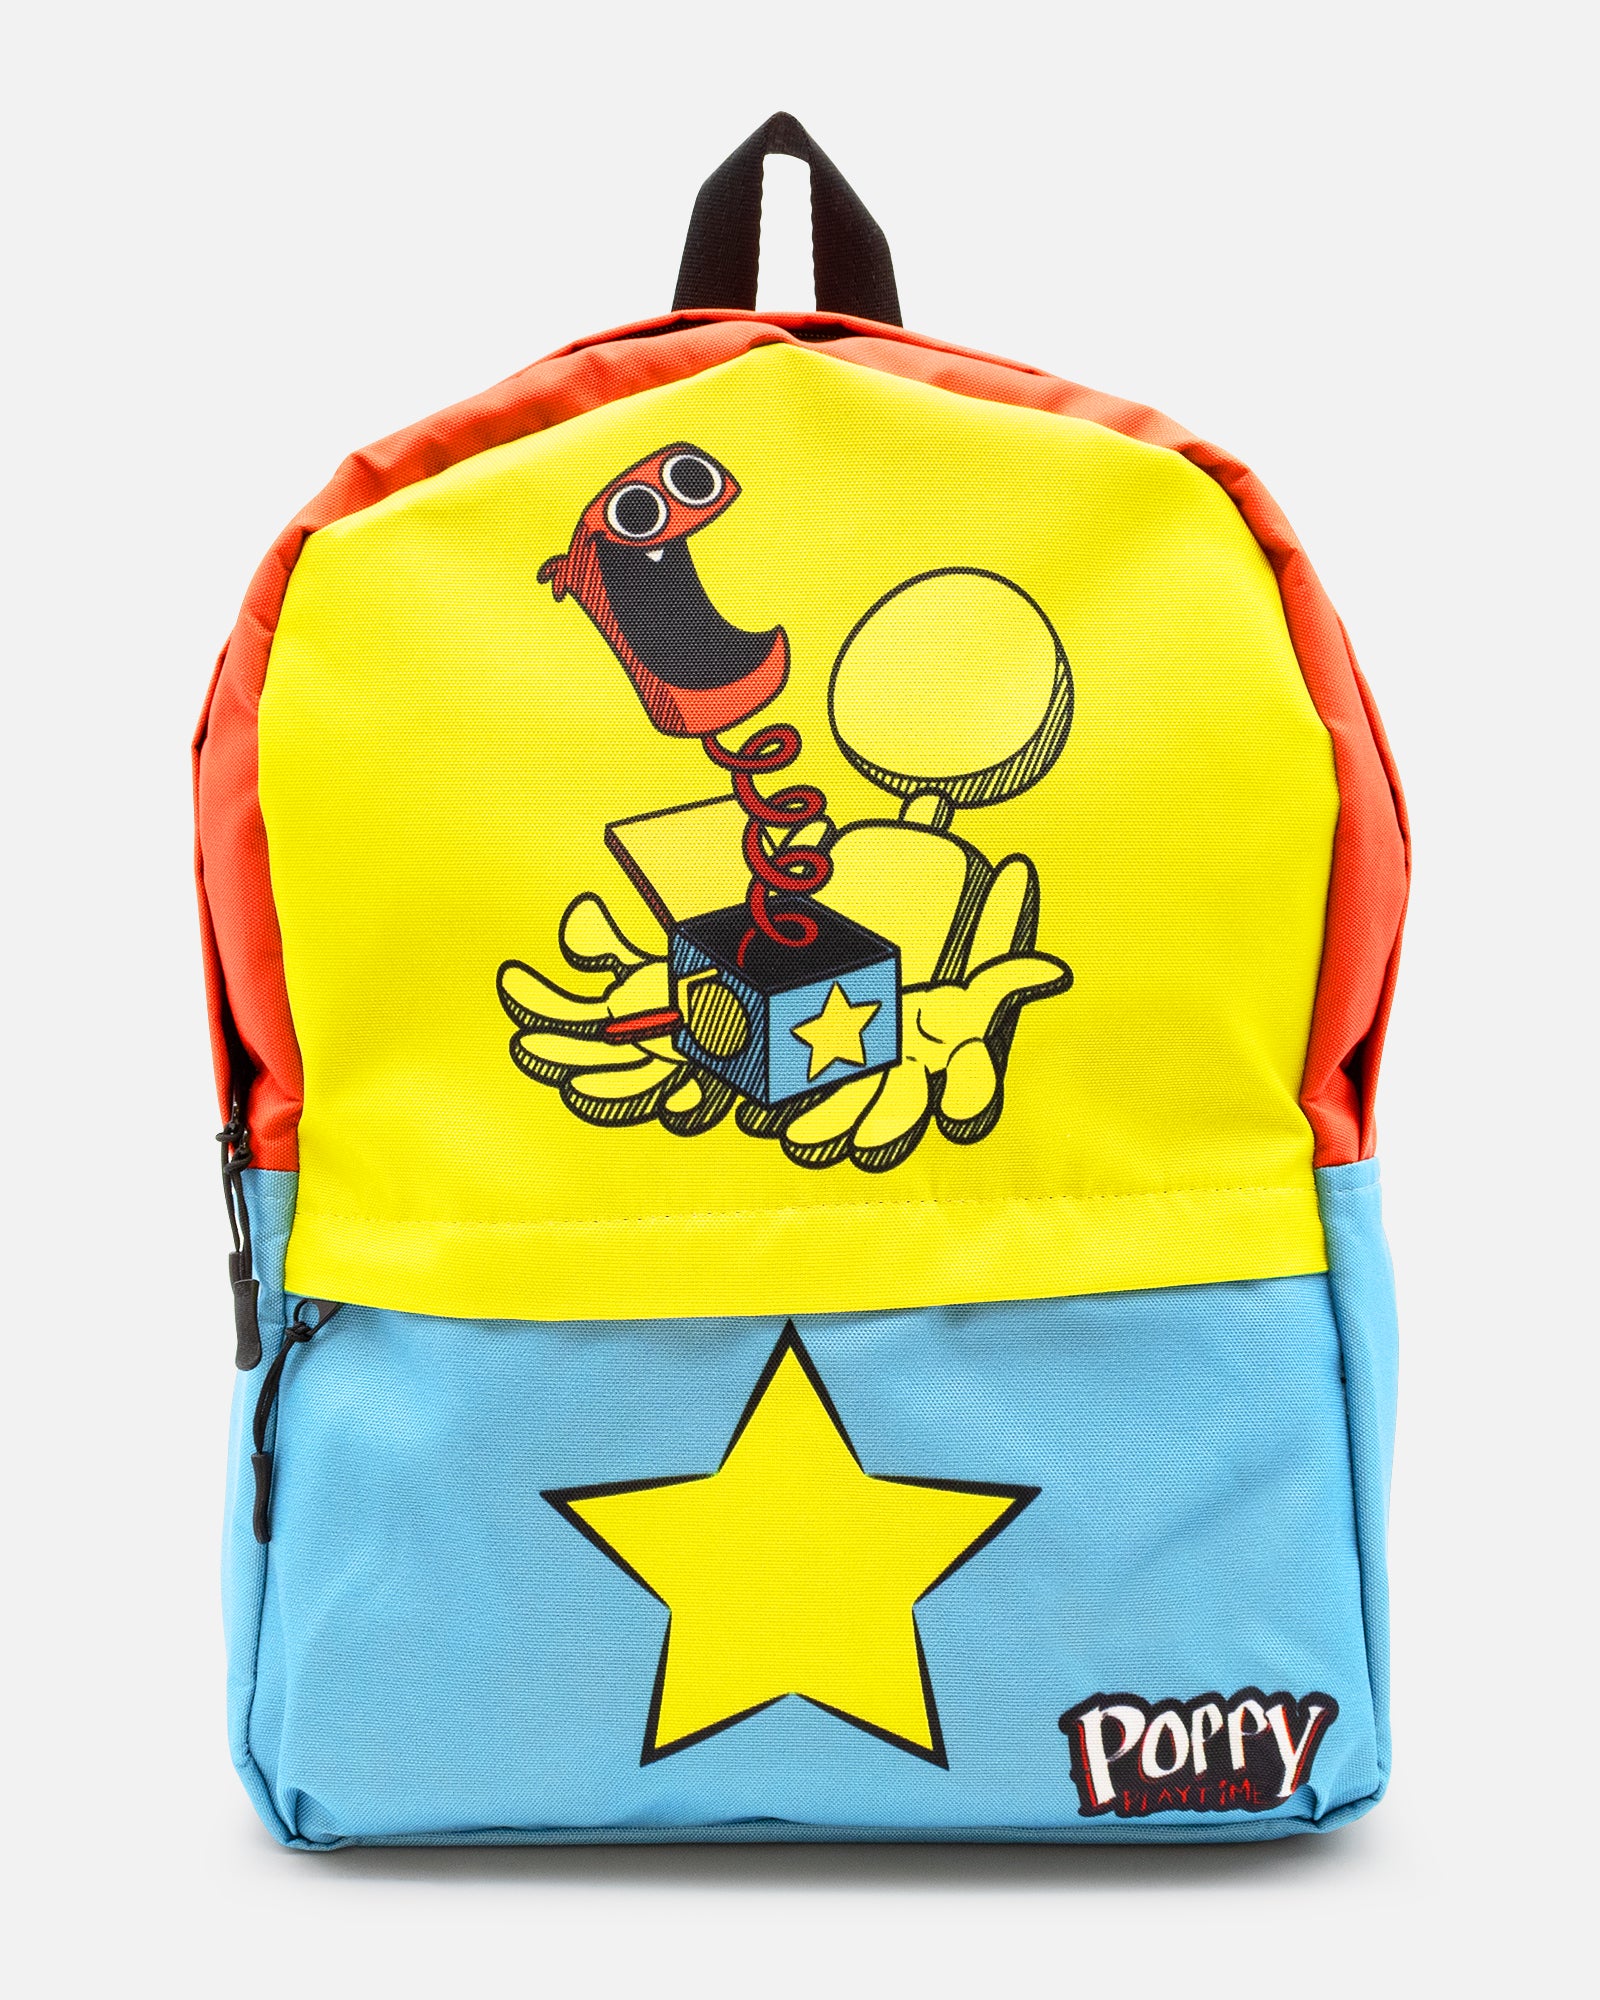 Grabpack Boxy Boo is so CUTE! : r/PoppyPlaytime